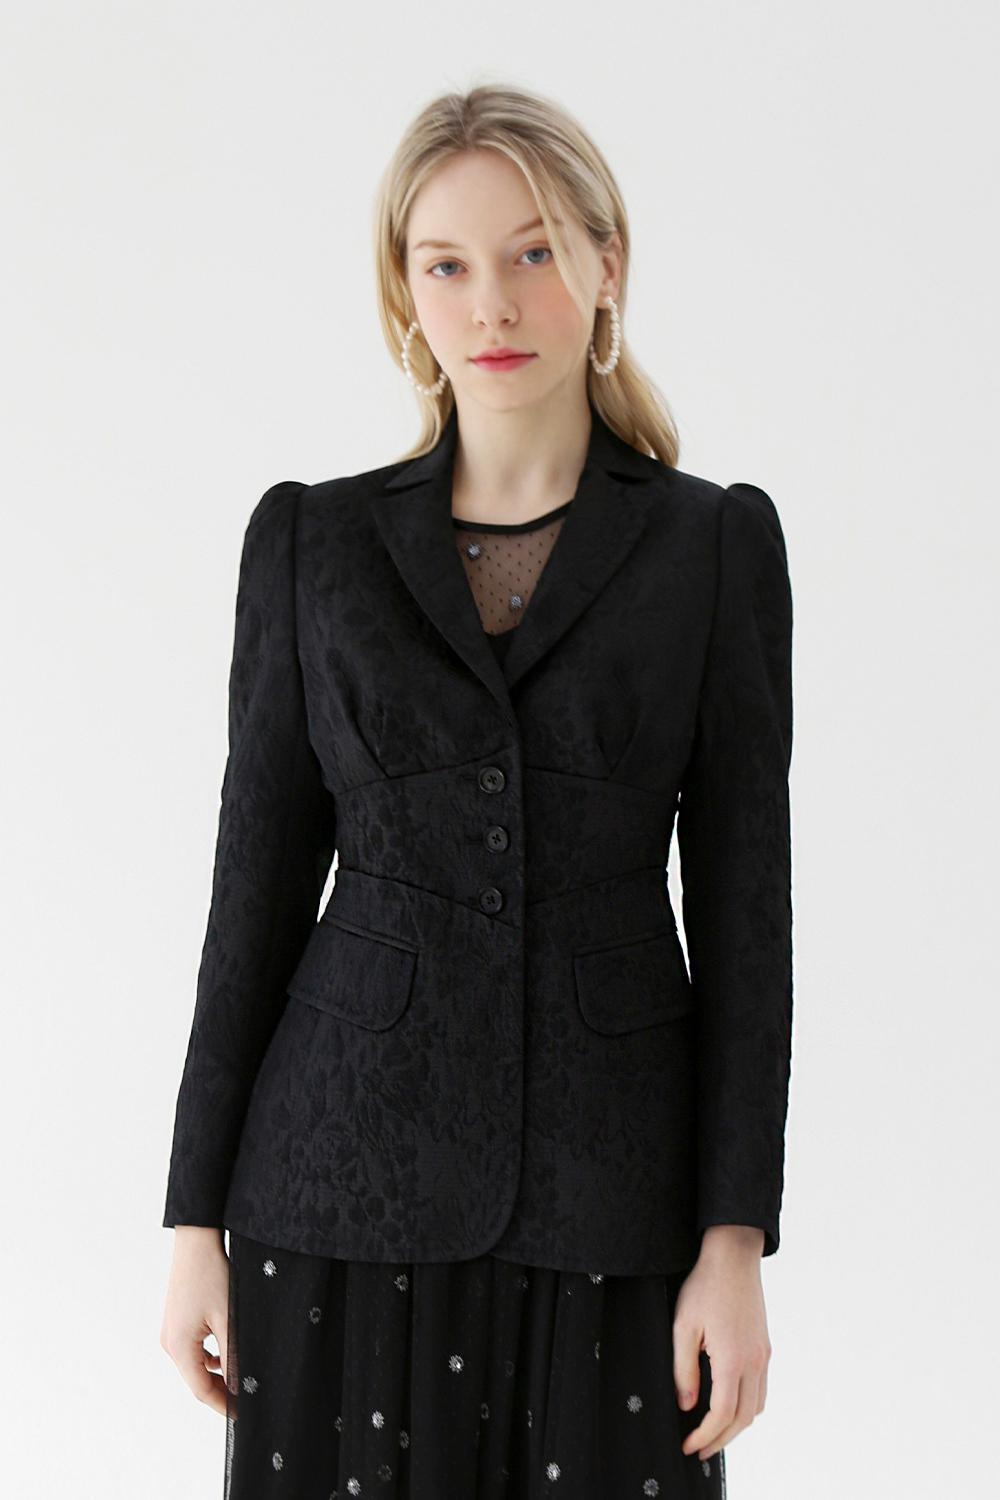 [Order Made] Define silhouette jacket (Jacquard Black)